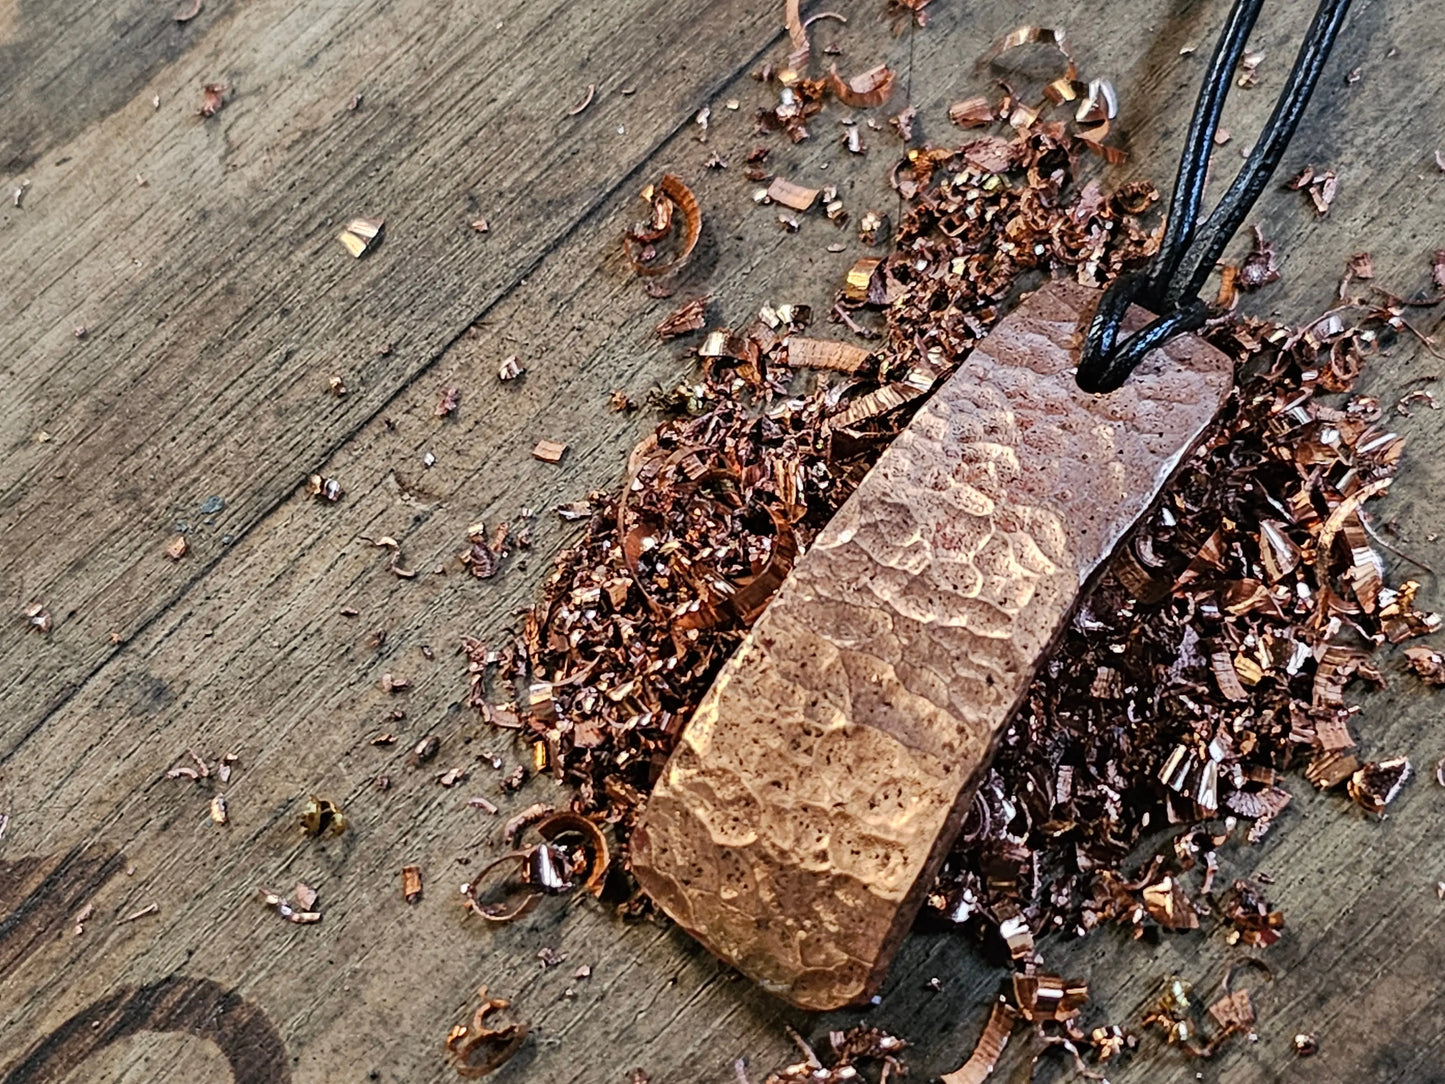 Handmade copper pendant necklace